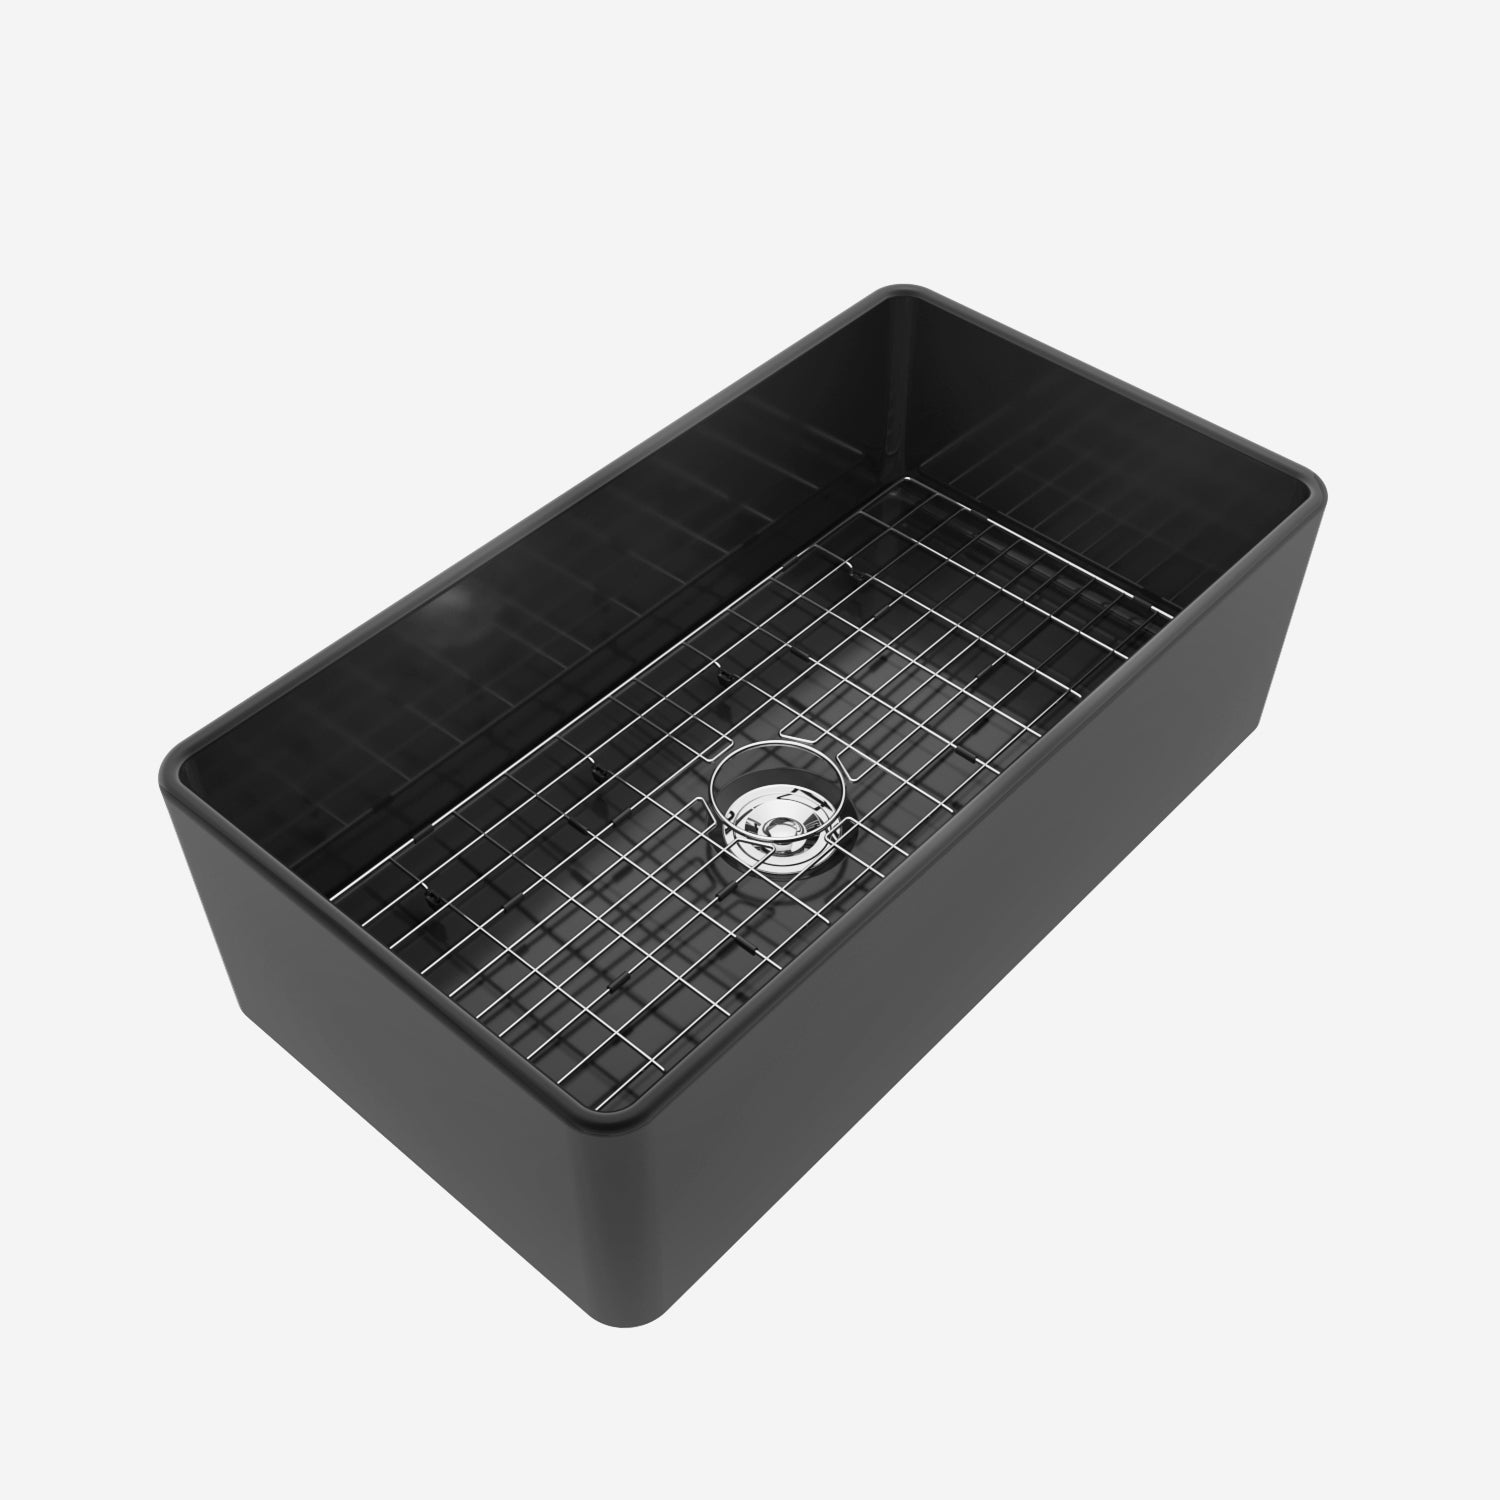 HOROW Best Black Farmhouse Sink Apron Single Bowl Model HR-S3018B